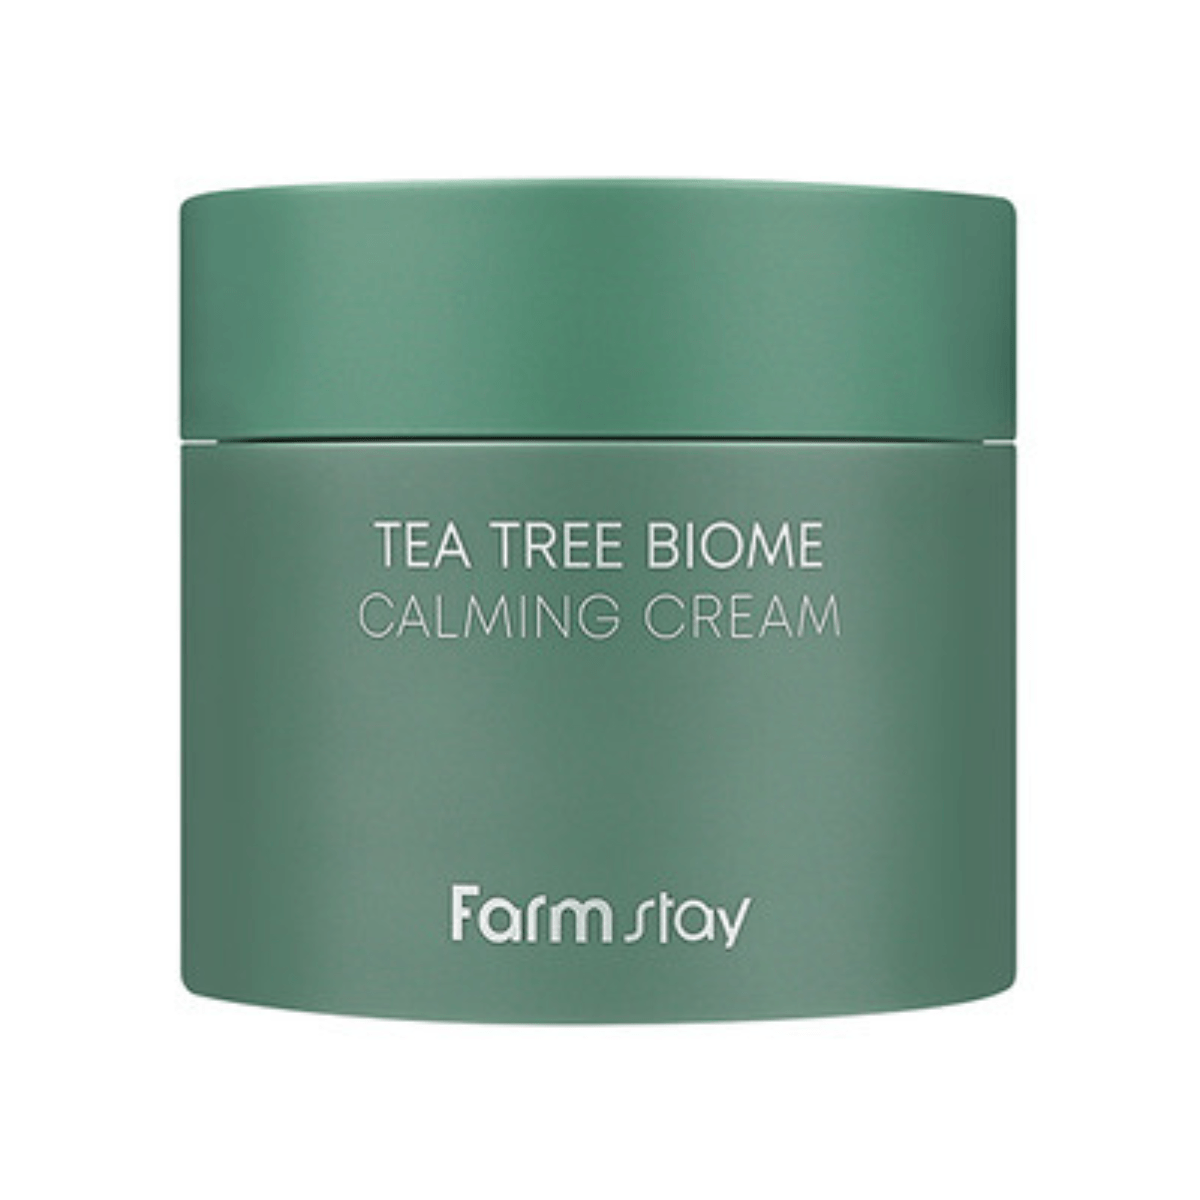 Farmstay Tea Tree Biome Calming Cream - Korea Korean Skincare Face Cream - Ushops, Centella Biome,Balance Biome,